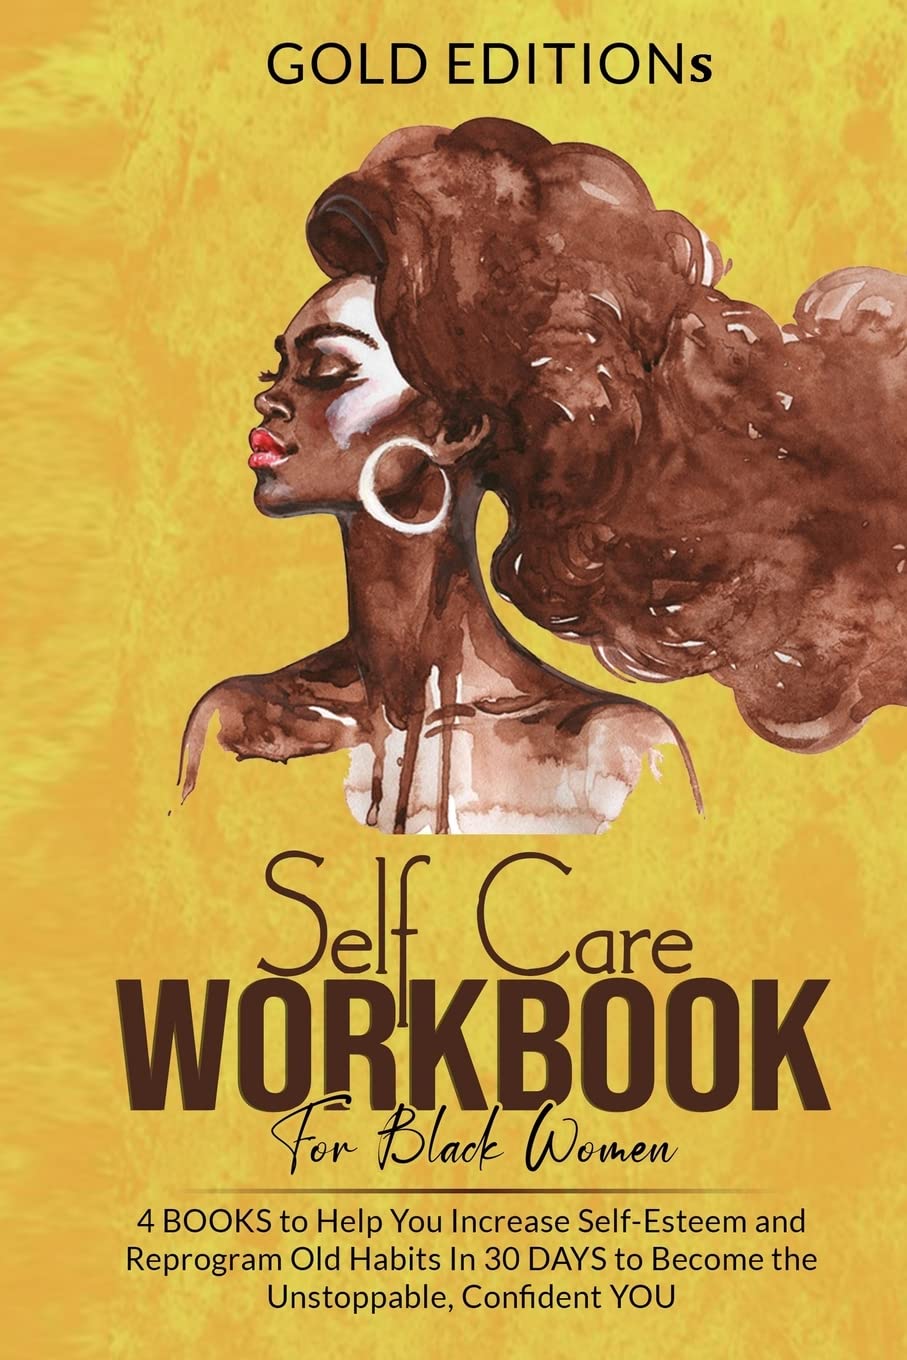 Self-Care Workbook for Black Women: 4 BOOKS to Help You Increase Self-Esteem - SureShot Books Publishing LLC